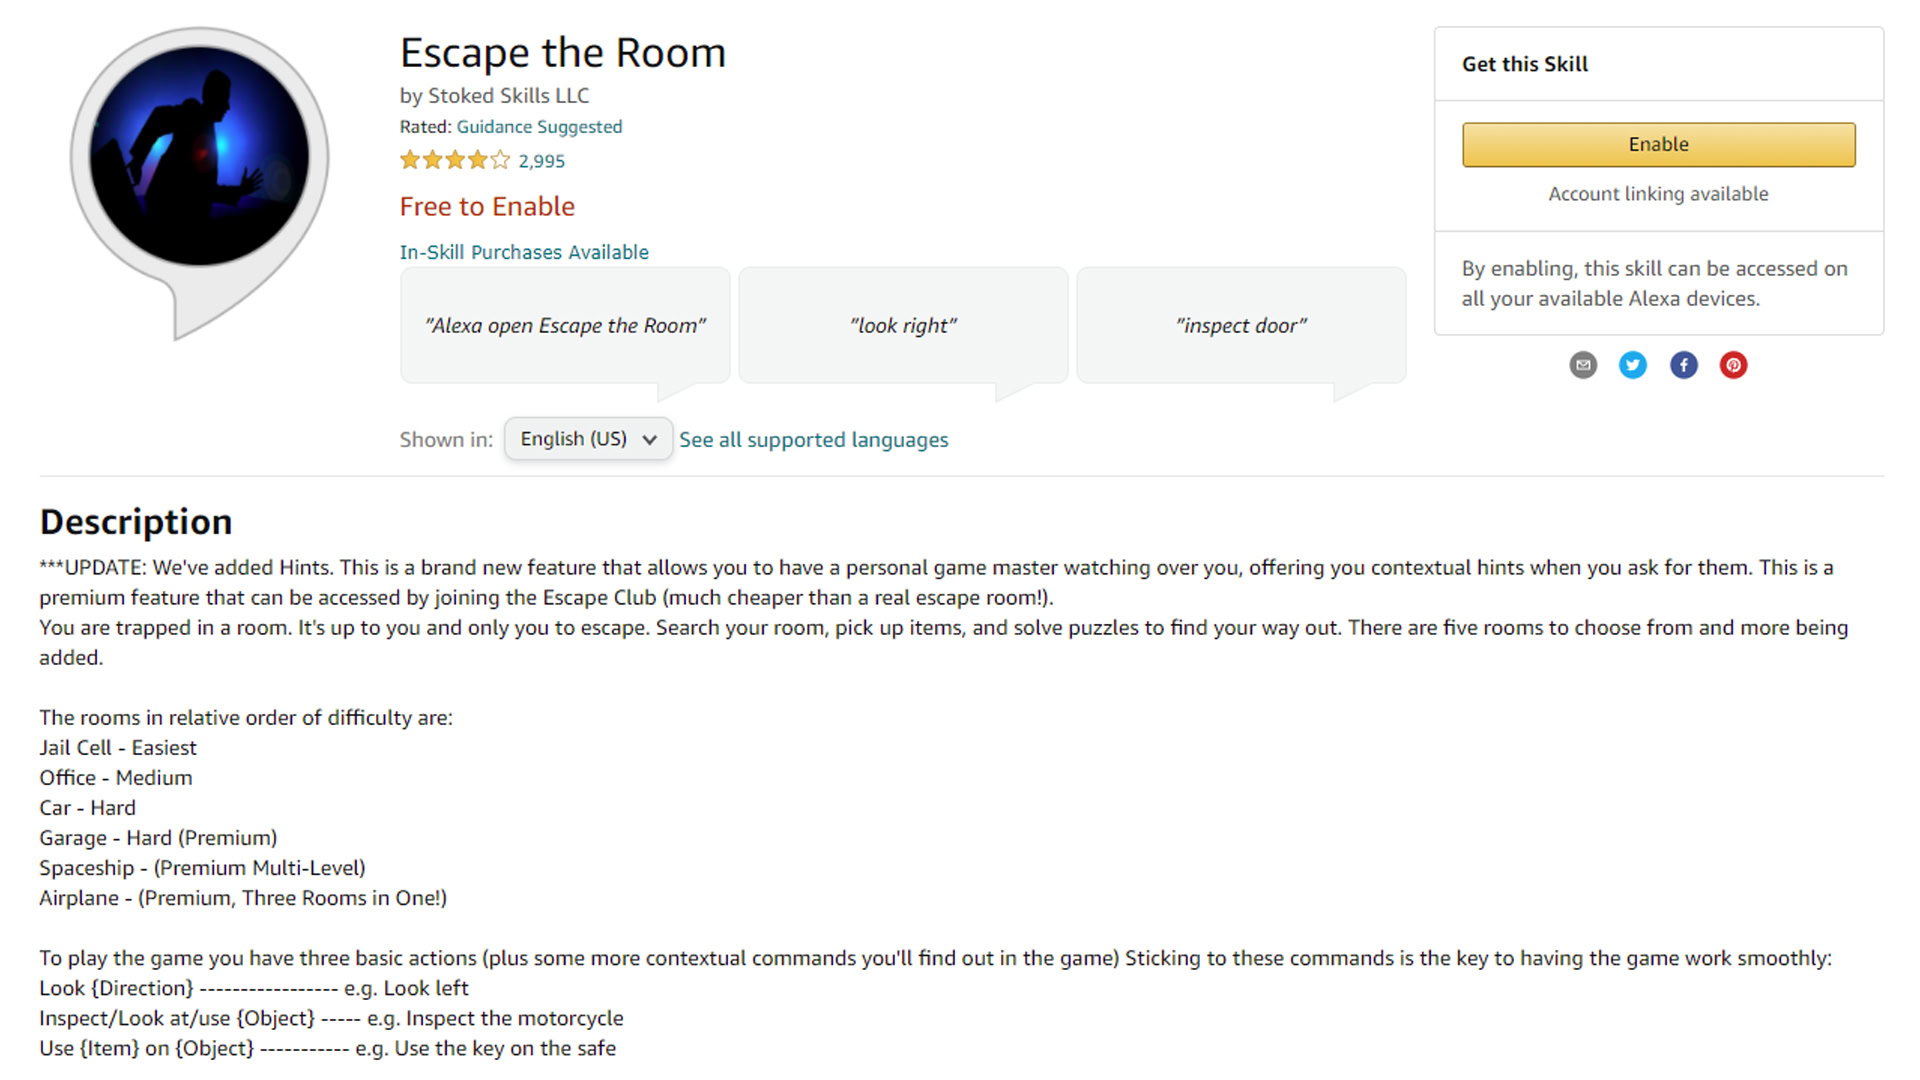 Escape the Room for Alexa